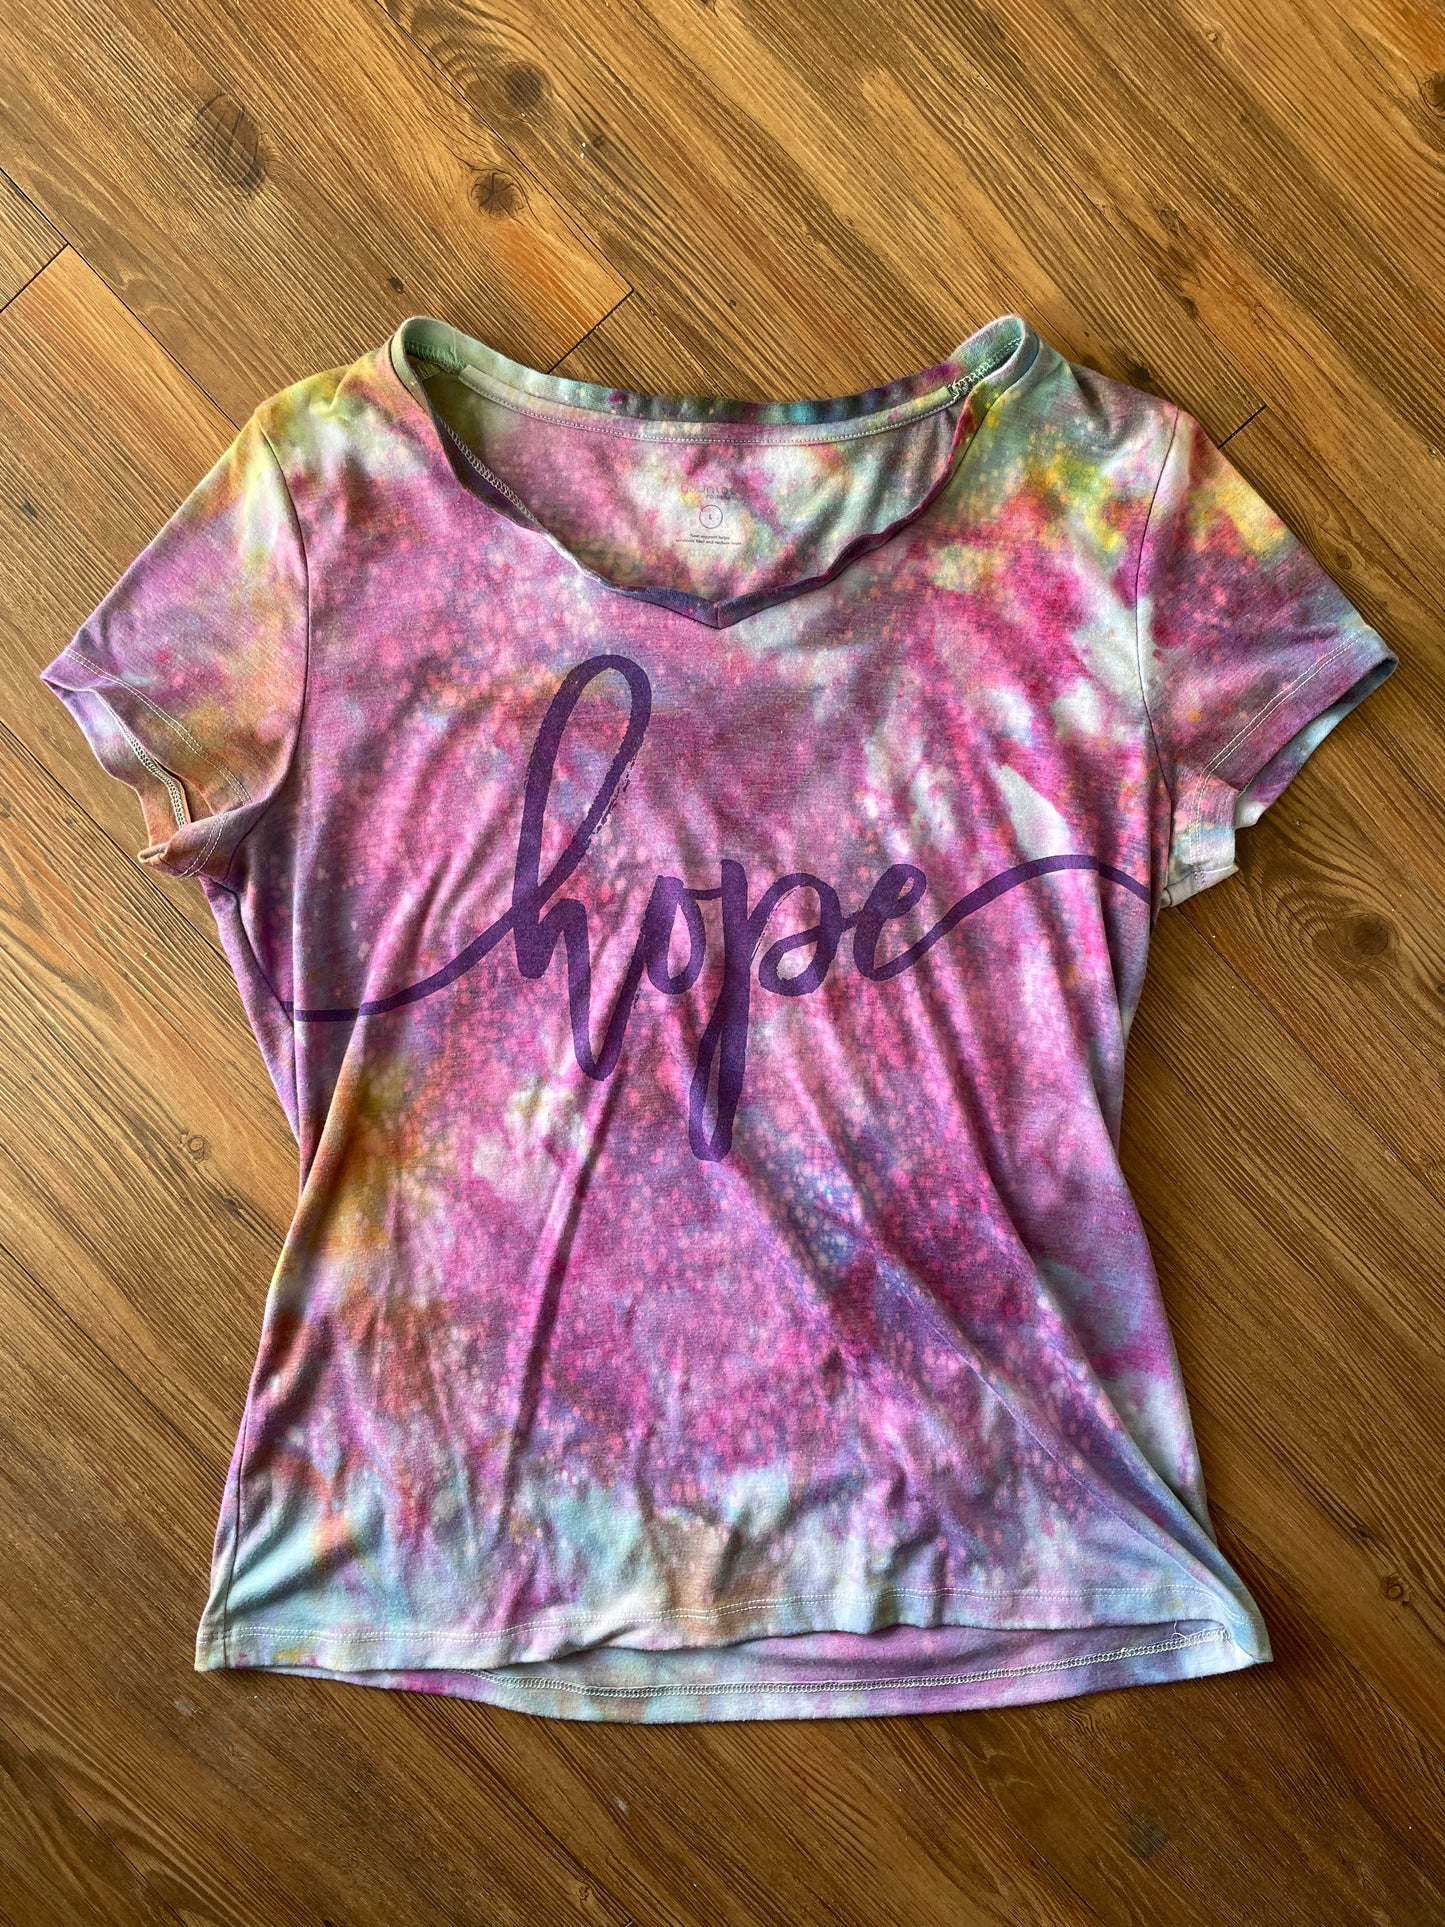 LARGE Women's HOPE Galaxy Tie Dye T-Shirt | Pink and Purple Ice Dye Short Sleeve